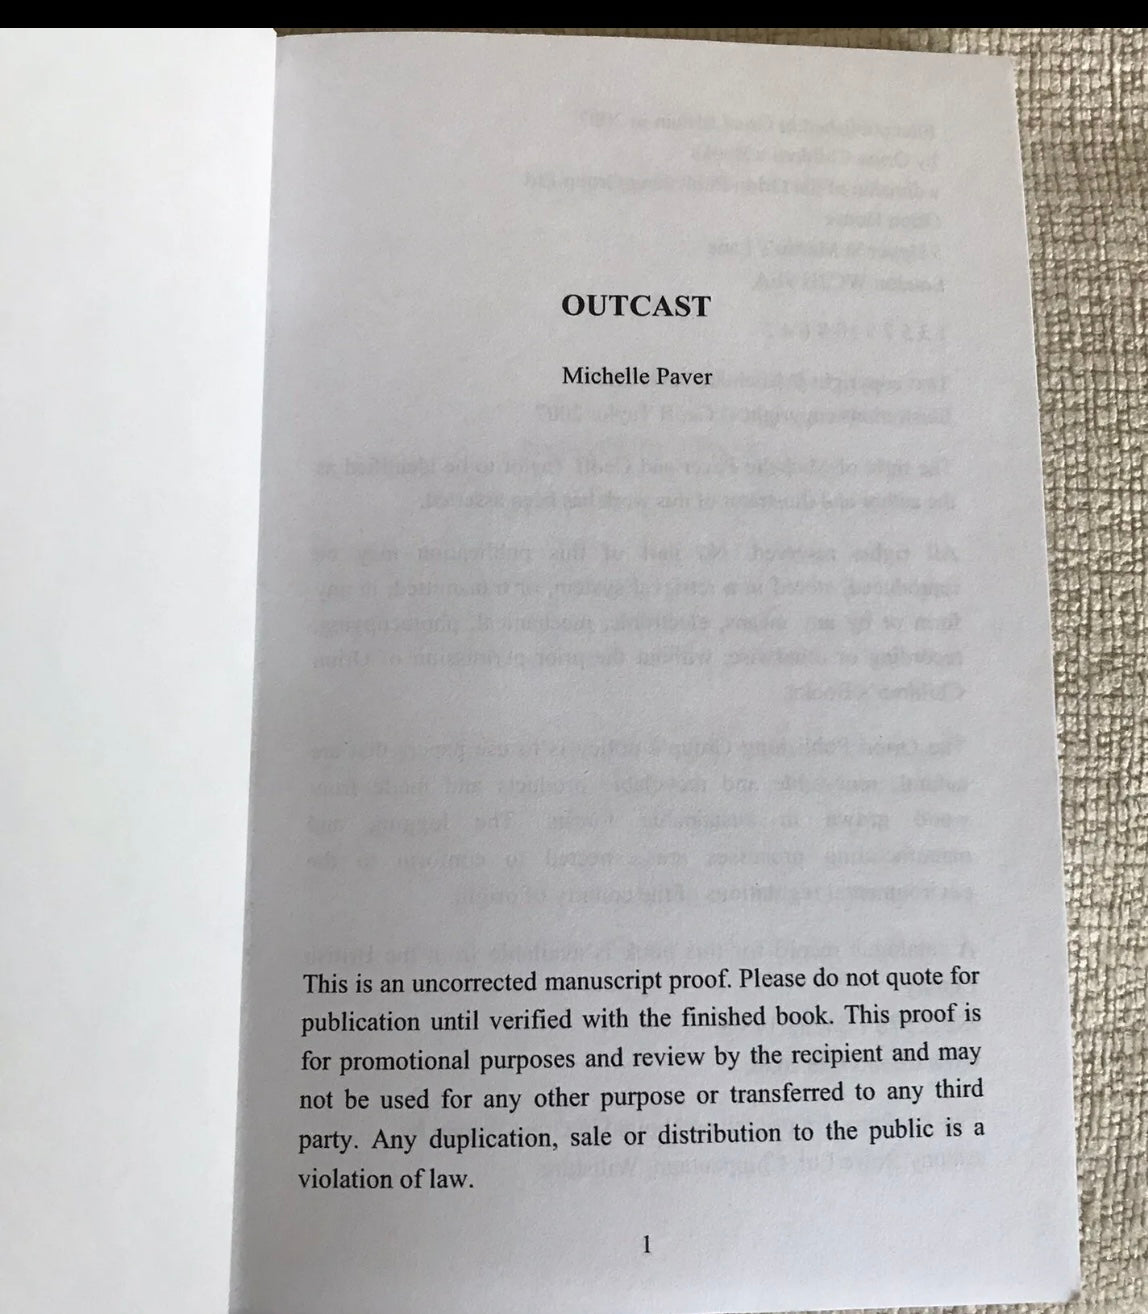 2007*1st Uncorrected Proof* Outcast - Michelle Paver (Orion Books)pb